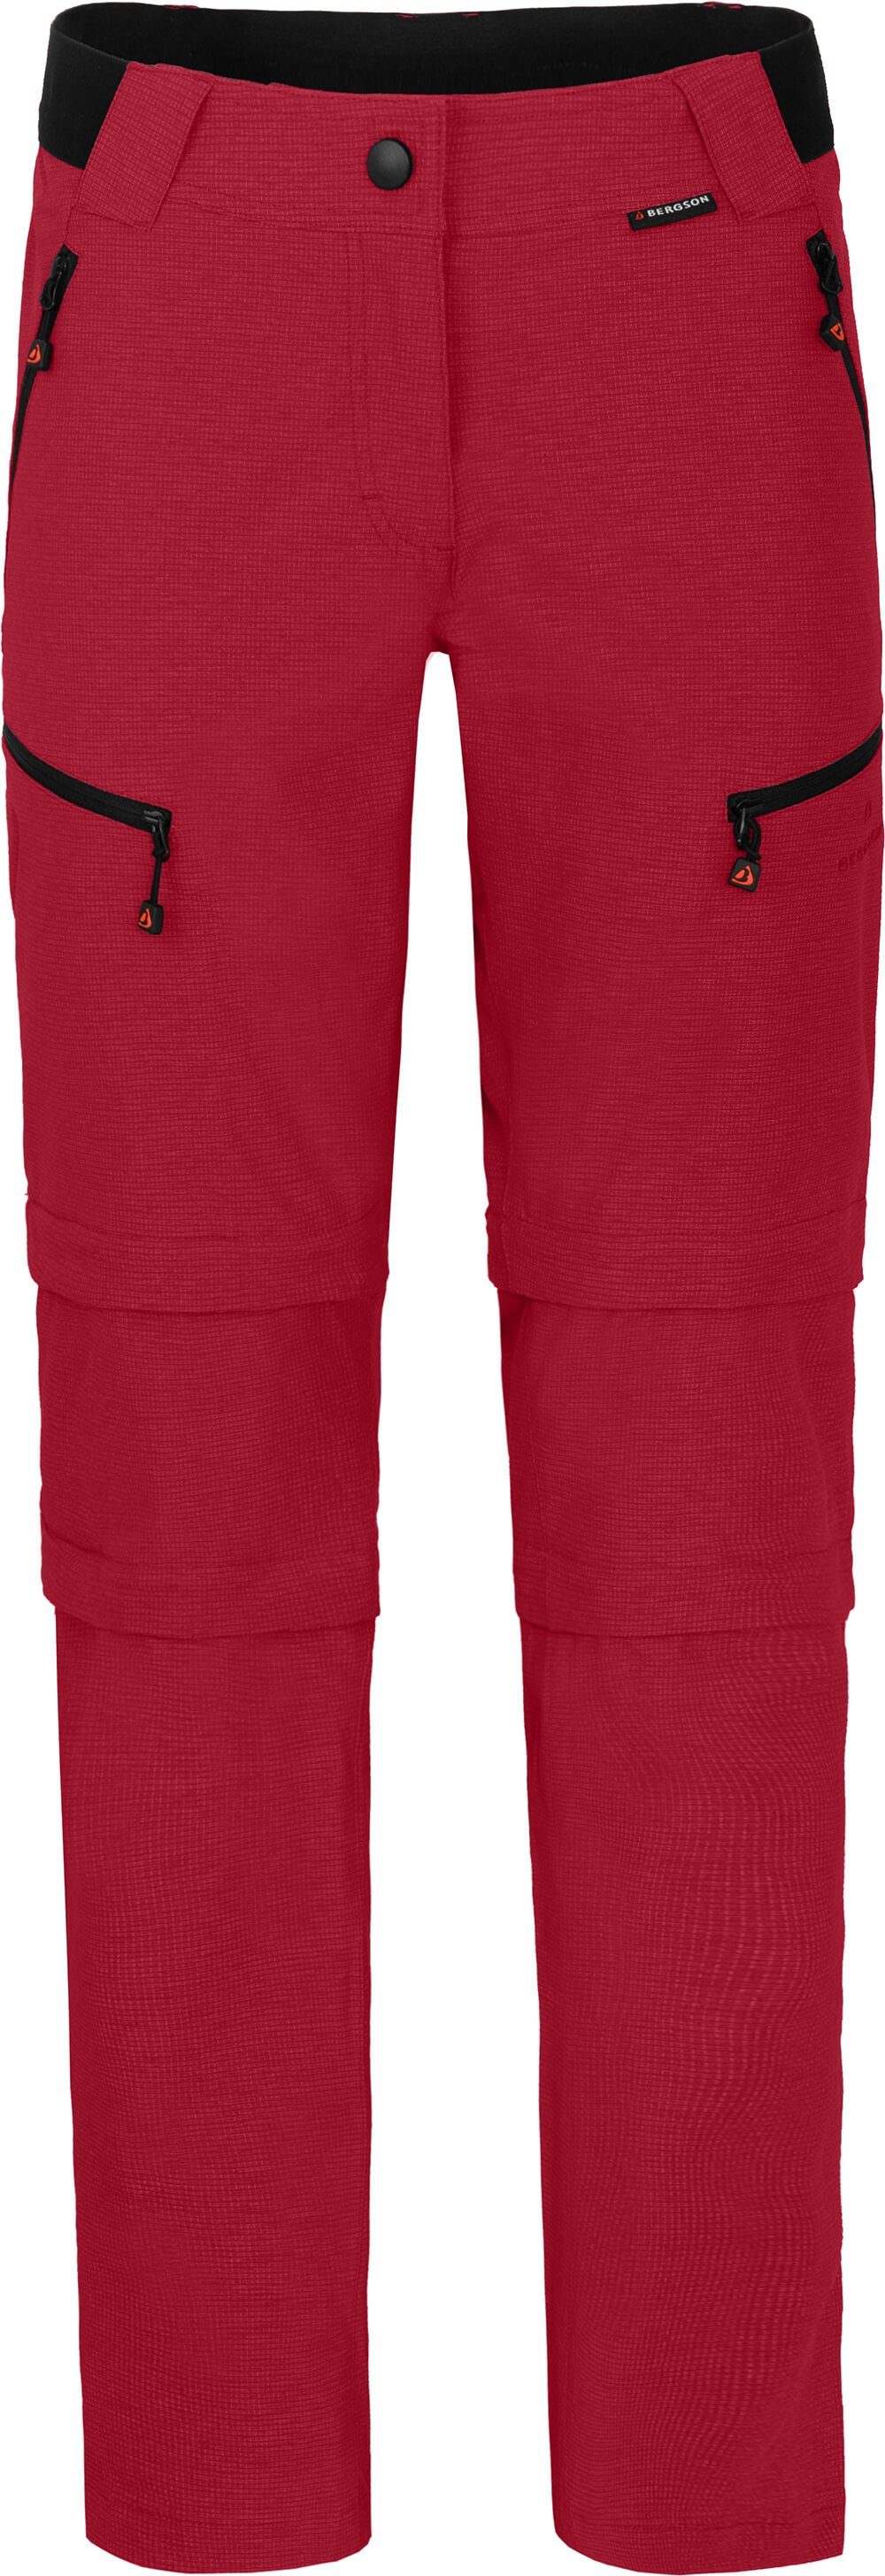 Wanderhose, Bergson mit robust Doppel PORI Zipp-Off T-ZIPP Zip-off-Hose Damen elastisch, Normalgrößen, rot